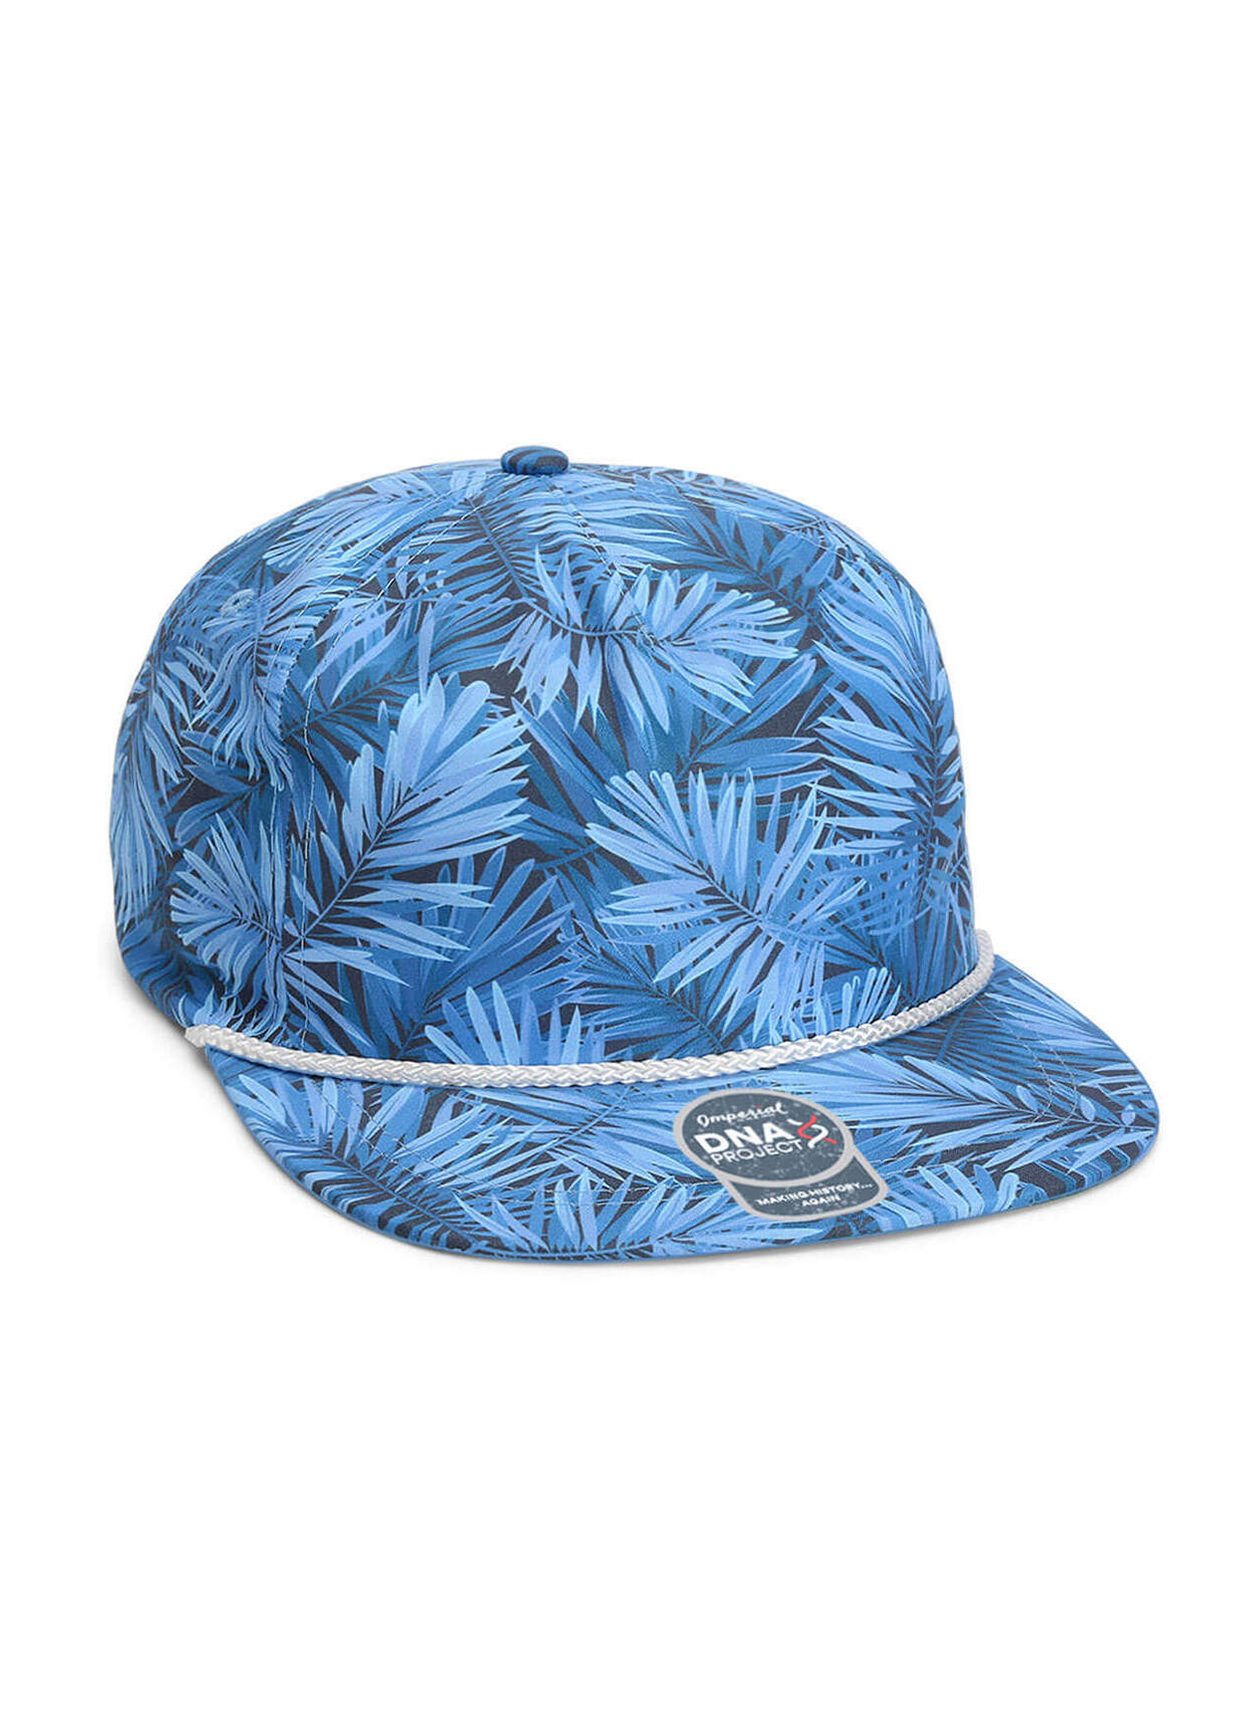 Imperial Blue Hawaiin The Aloha Rope Hat